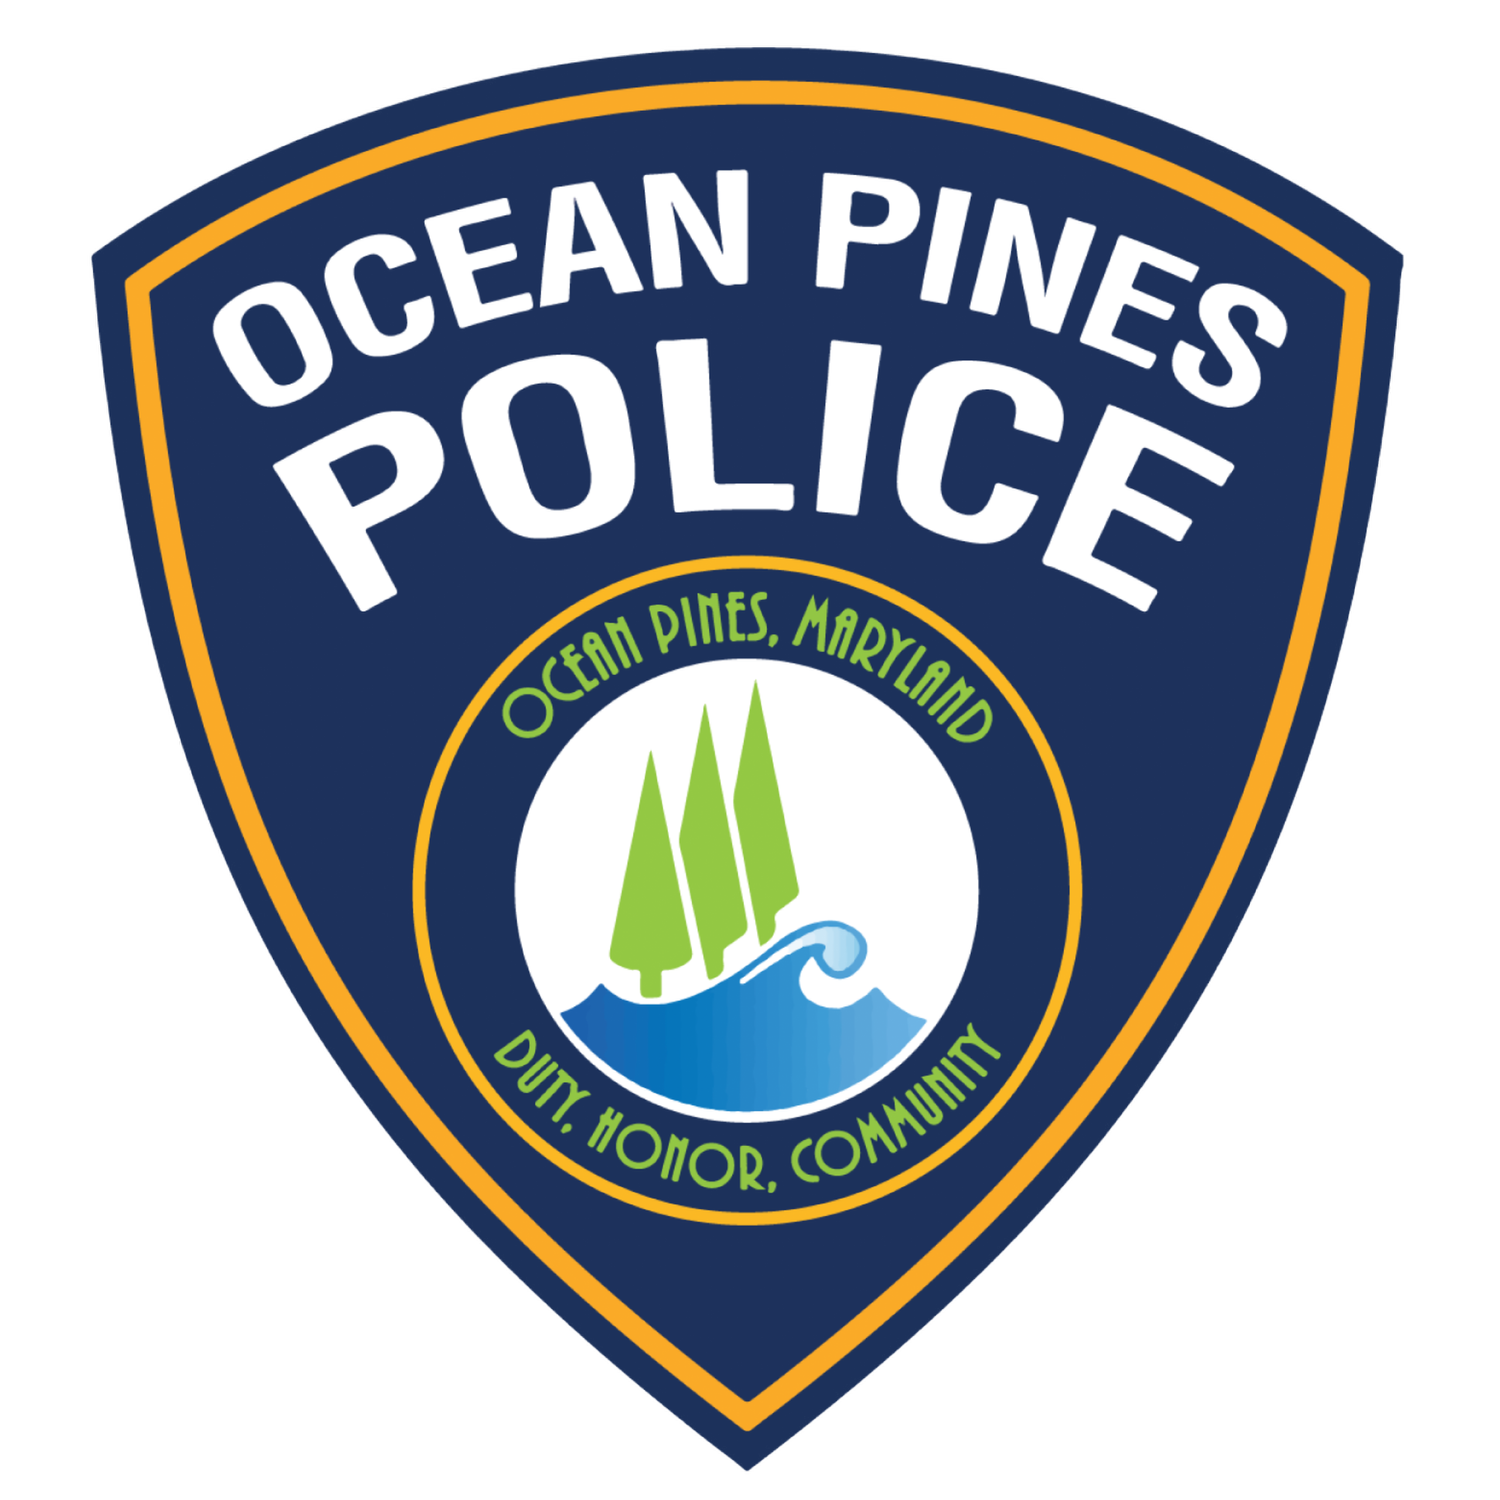 Ocean Pines Police Department